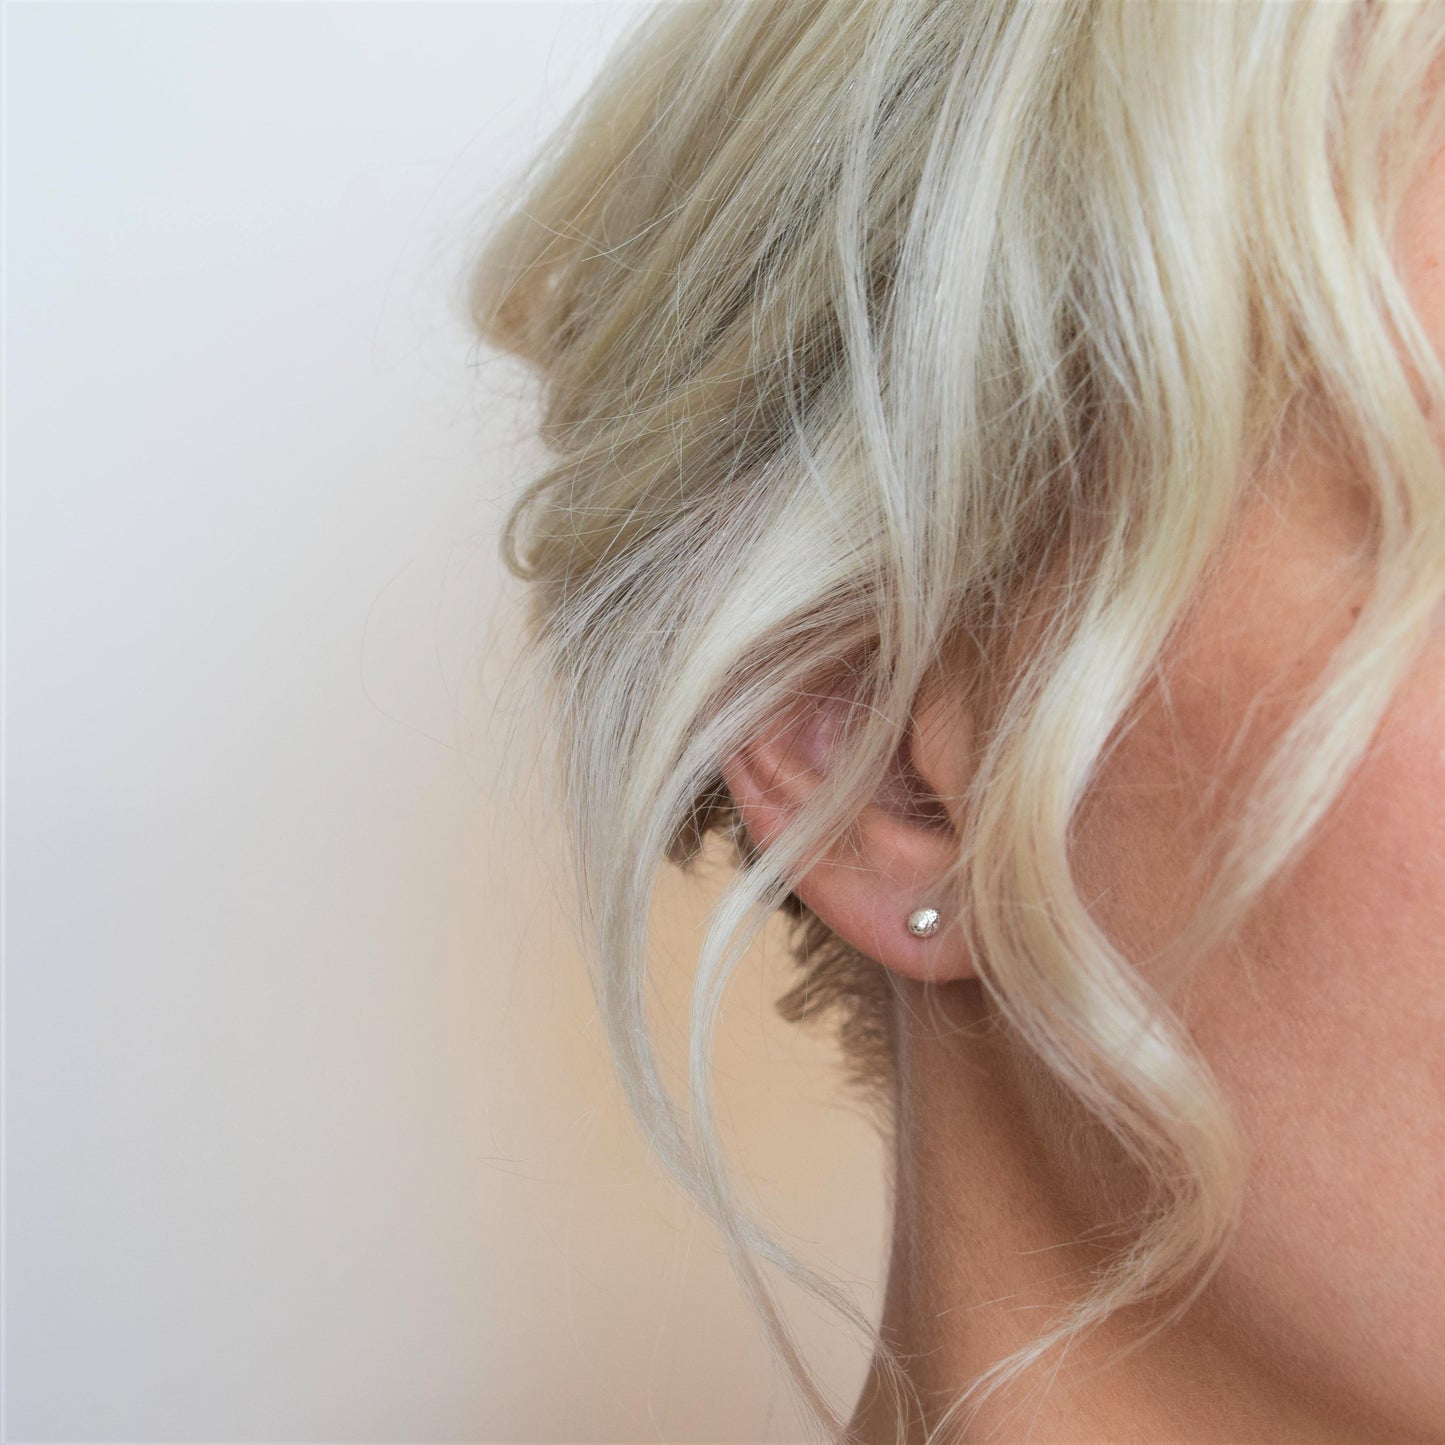 image of silver ball stud earrings on model